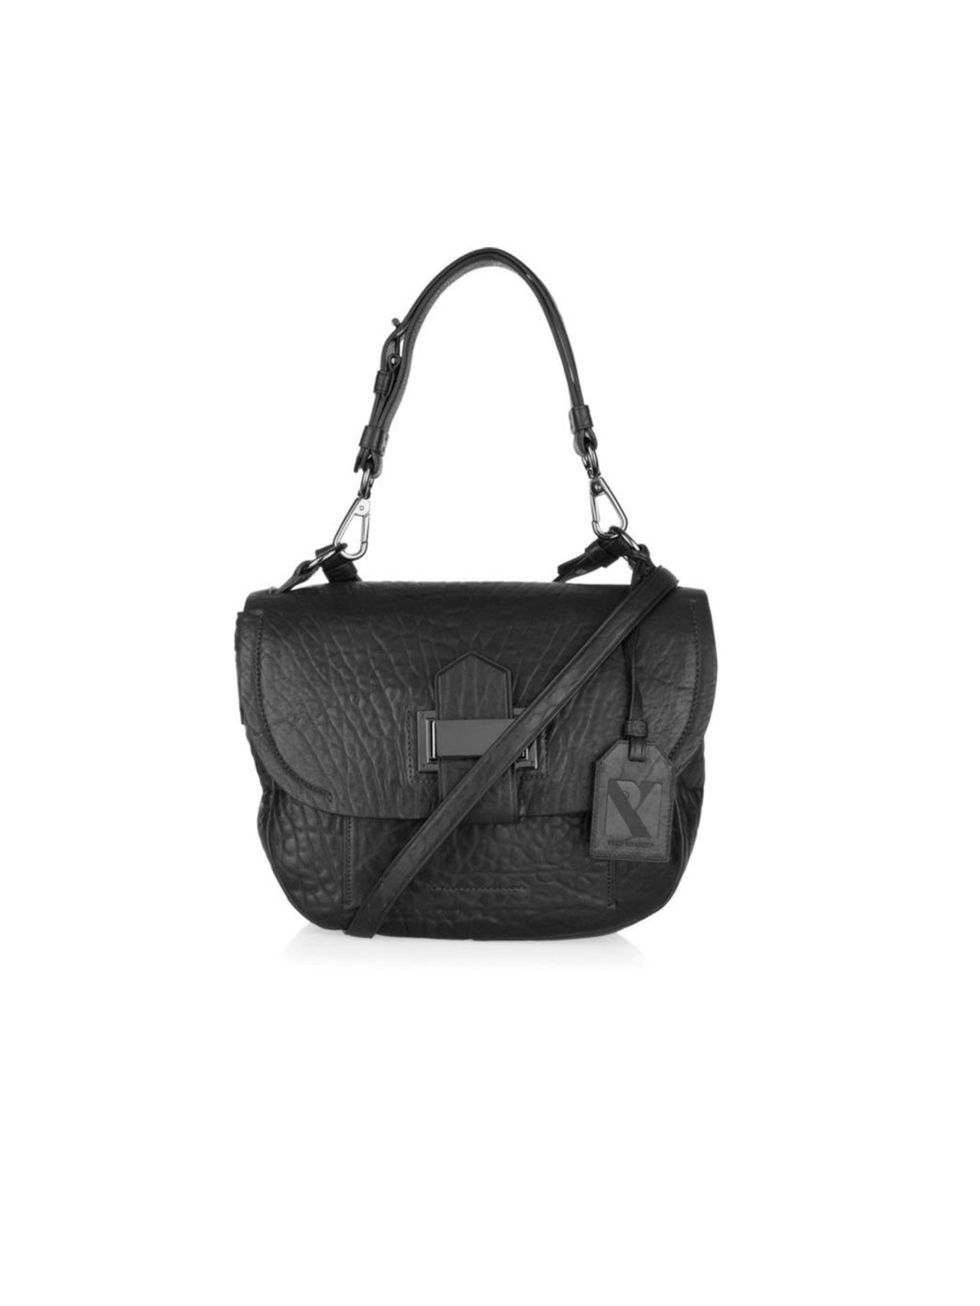 <p>Reed Krakoff shoulder bag, £785, at <a href="http://www.net-a-porter.com/product/167366">Net-a-Porter</a></p>